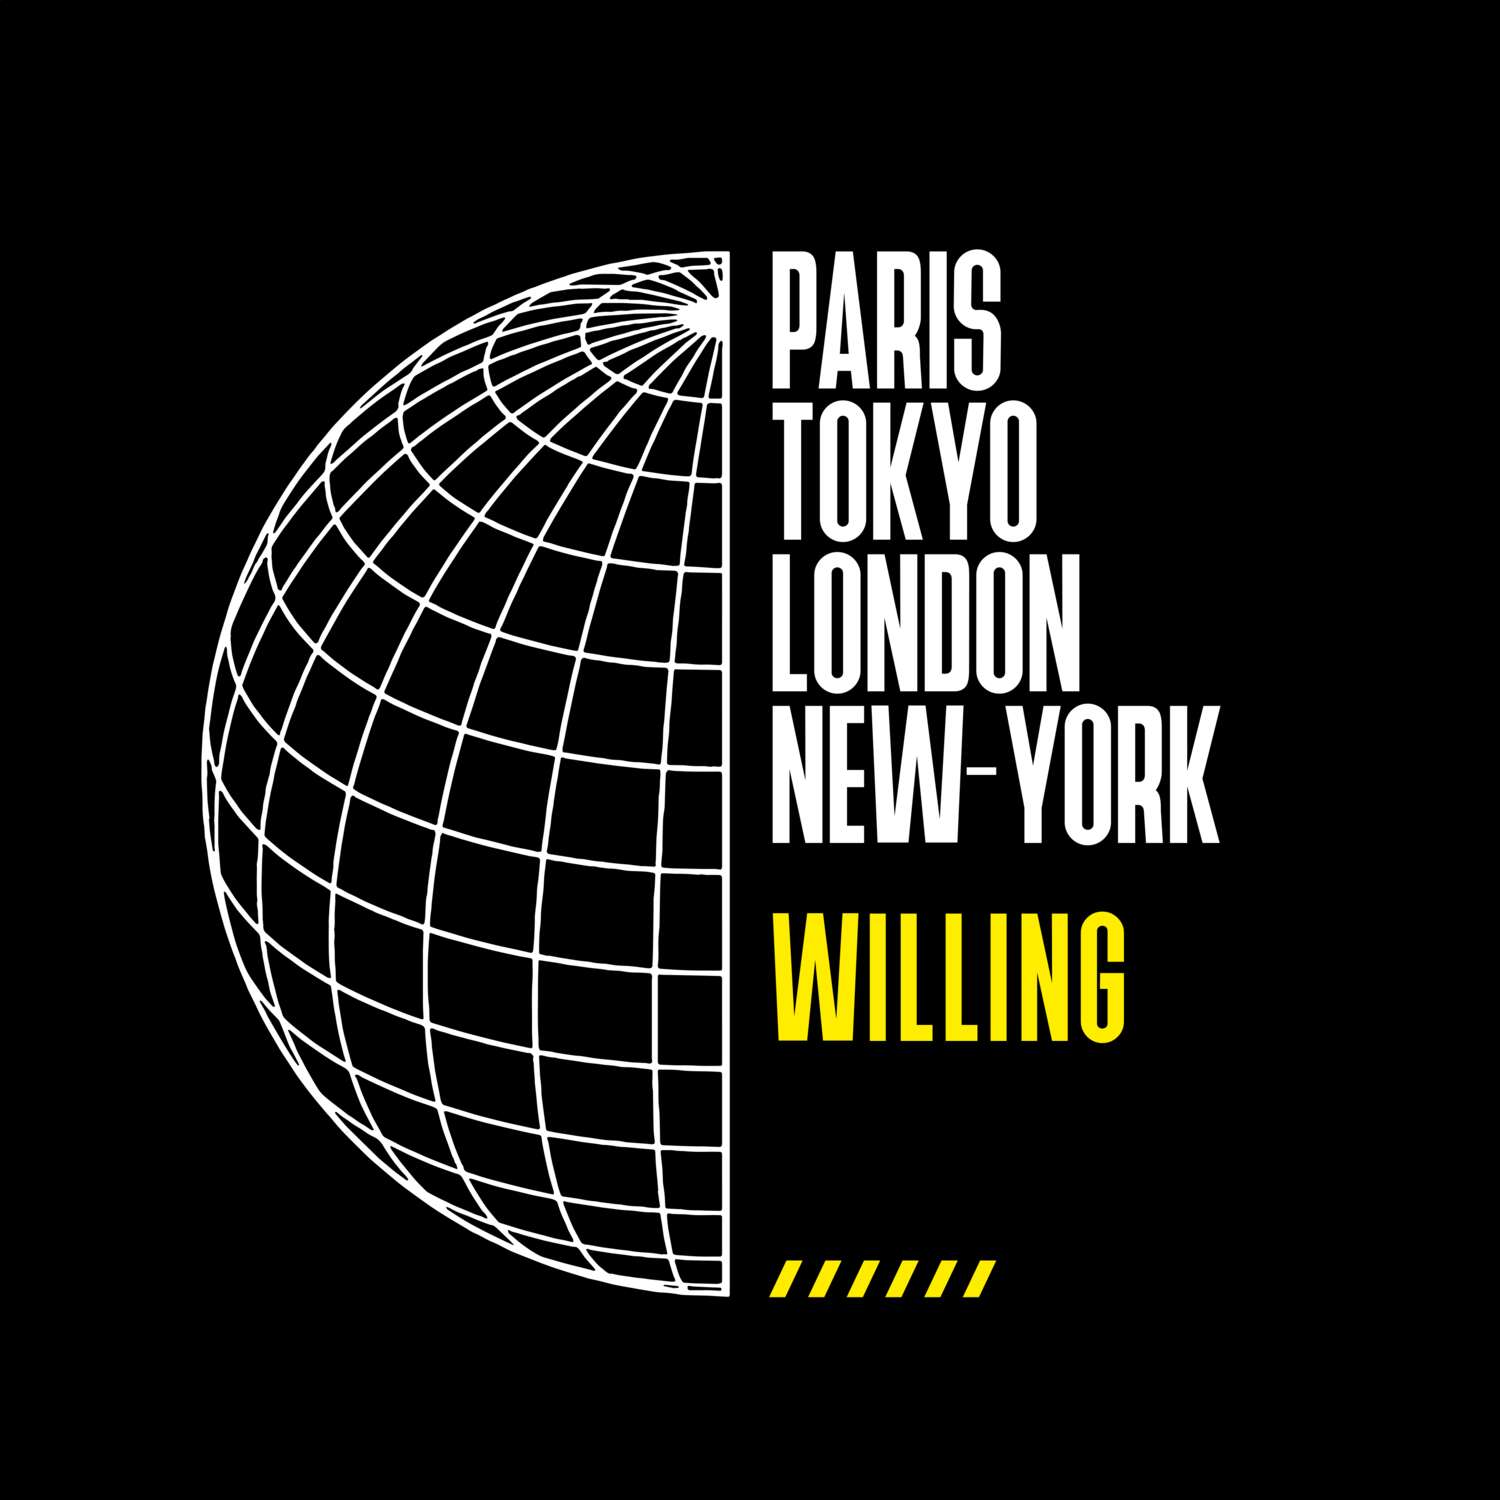 Willing T-Shirt »Paris Tokyo London«